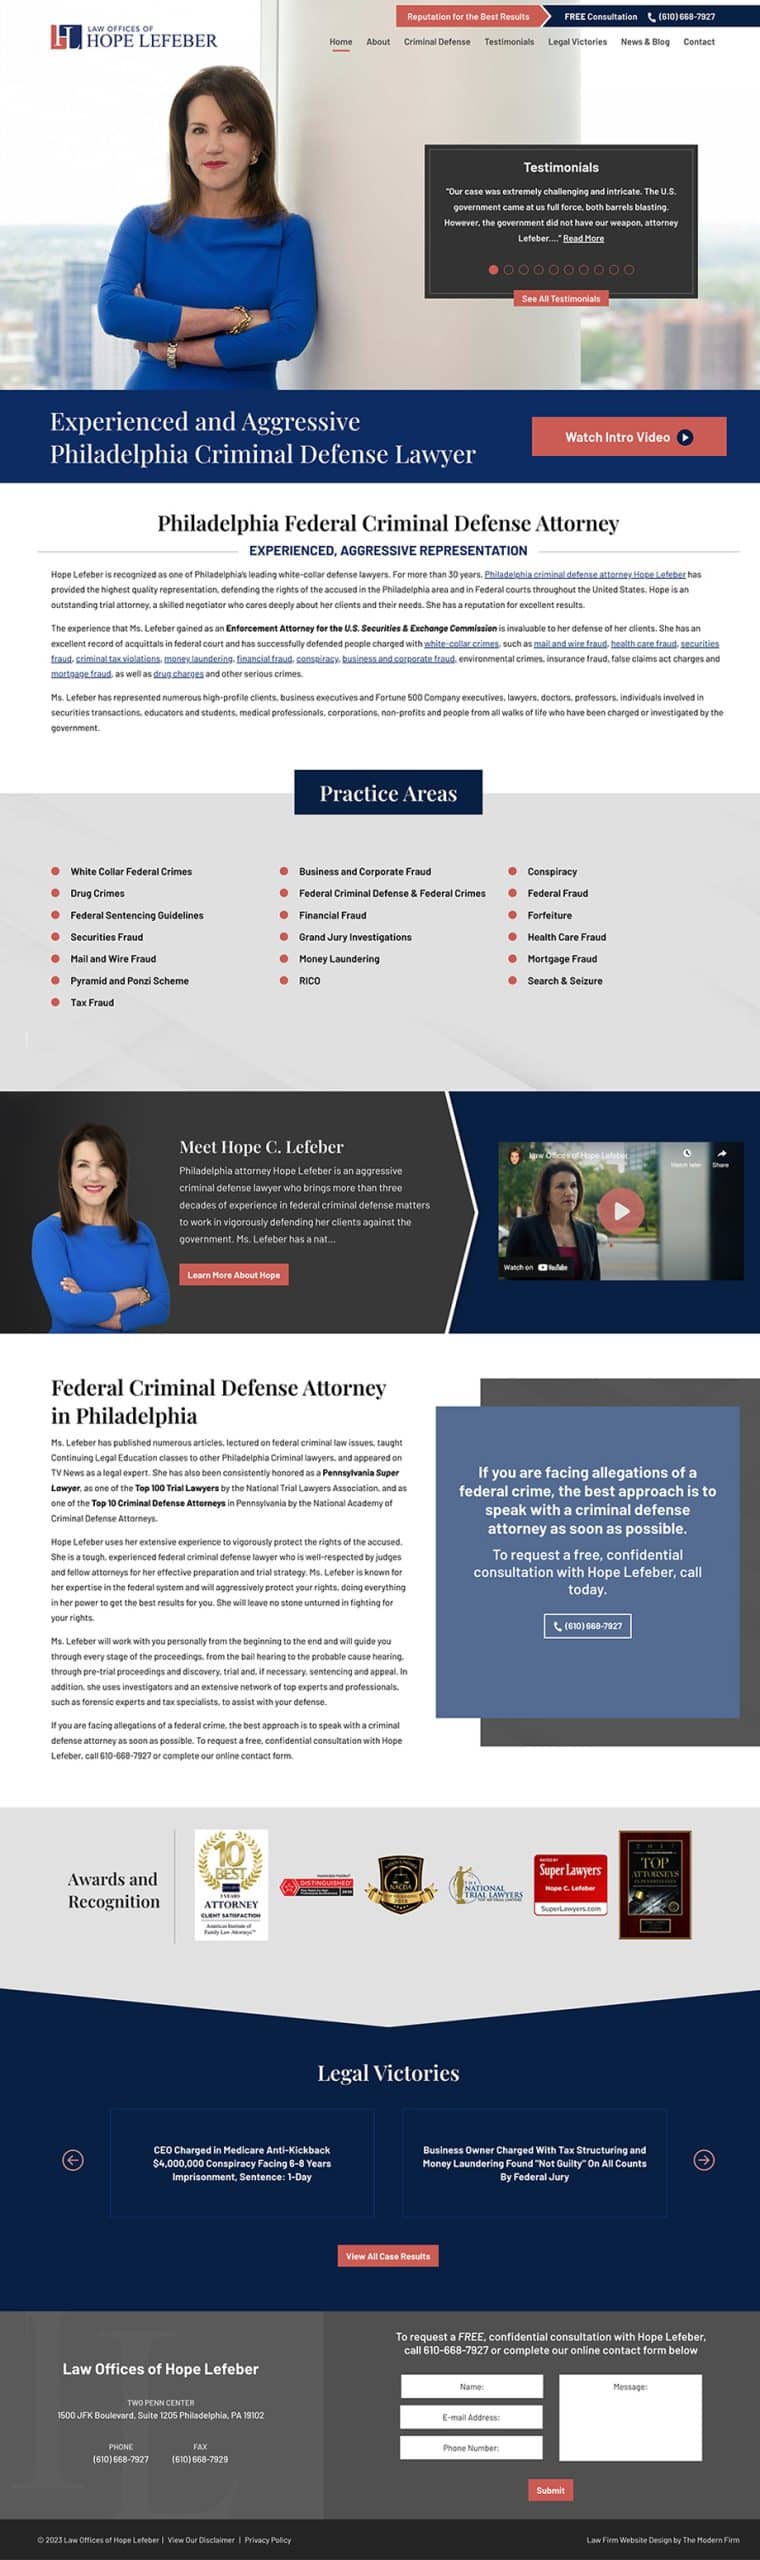 Law Firm Website Design for Law Offices of Hope Lefeber